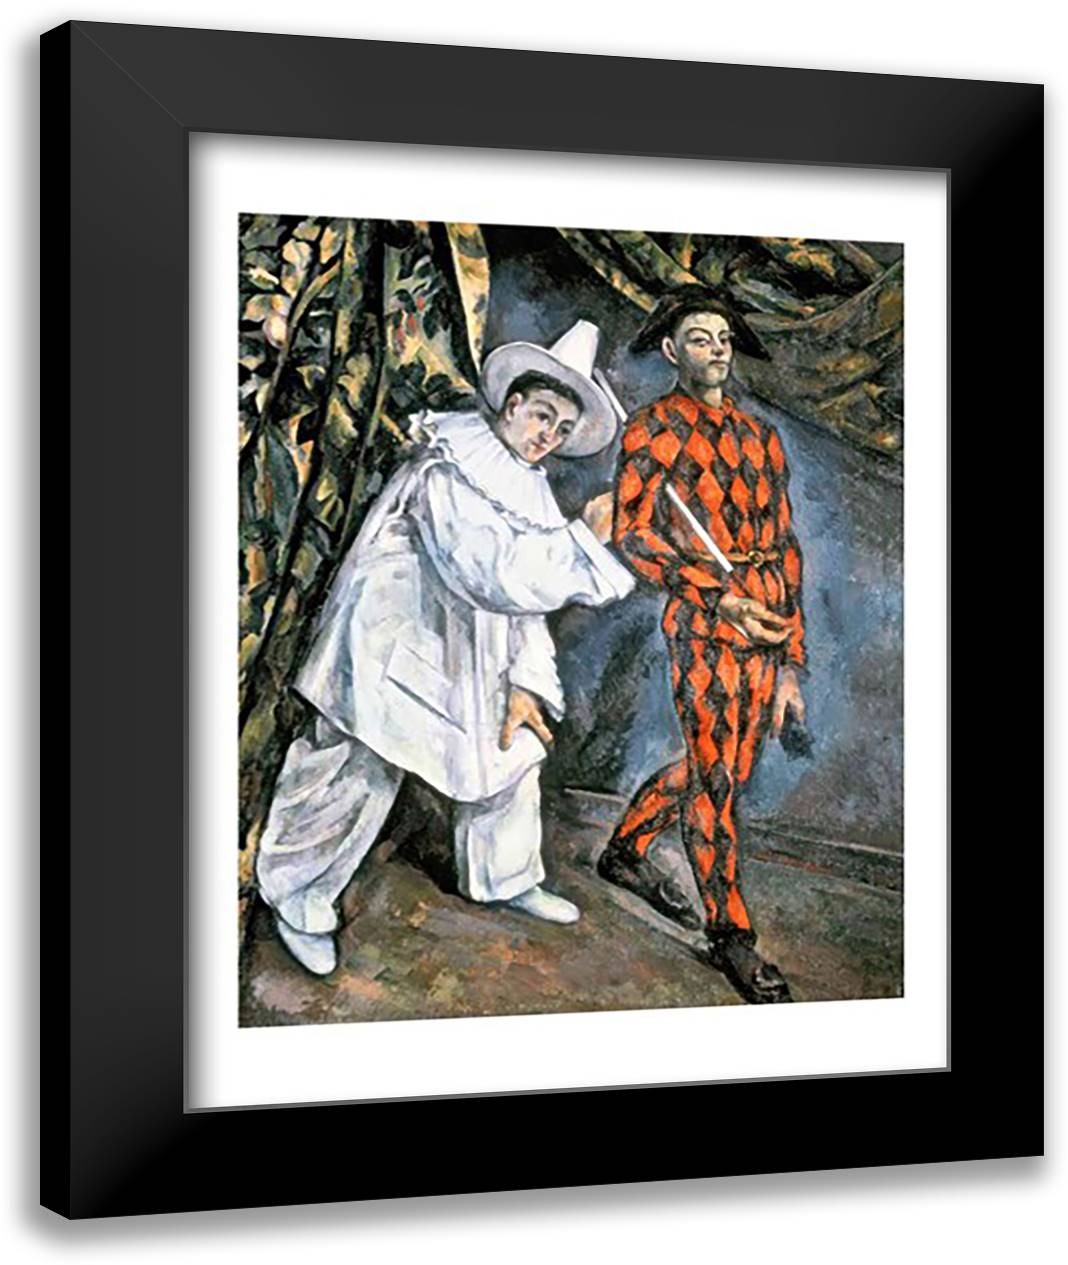 Pierrot and Harlequin 22x28 Black Modern Wood Framed Art Print Poster by Cezanne, Paul